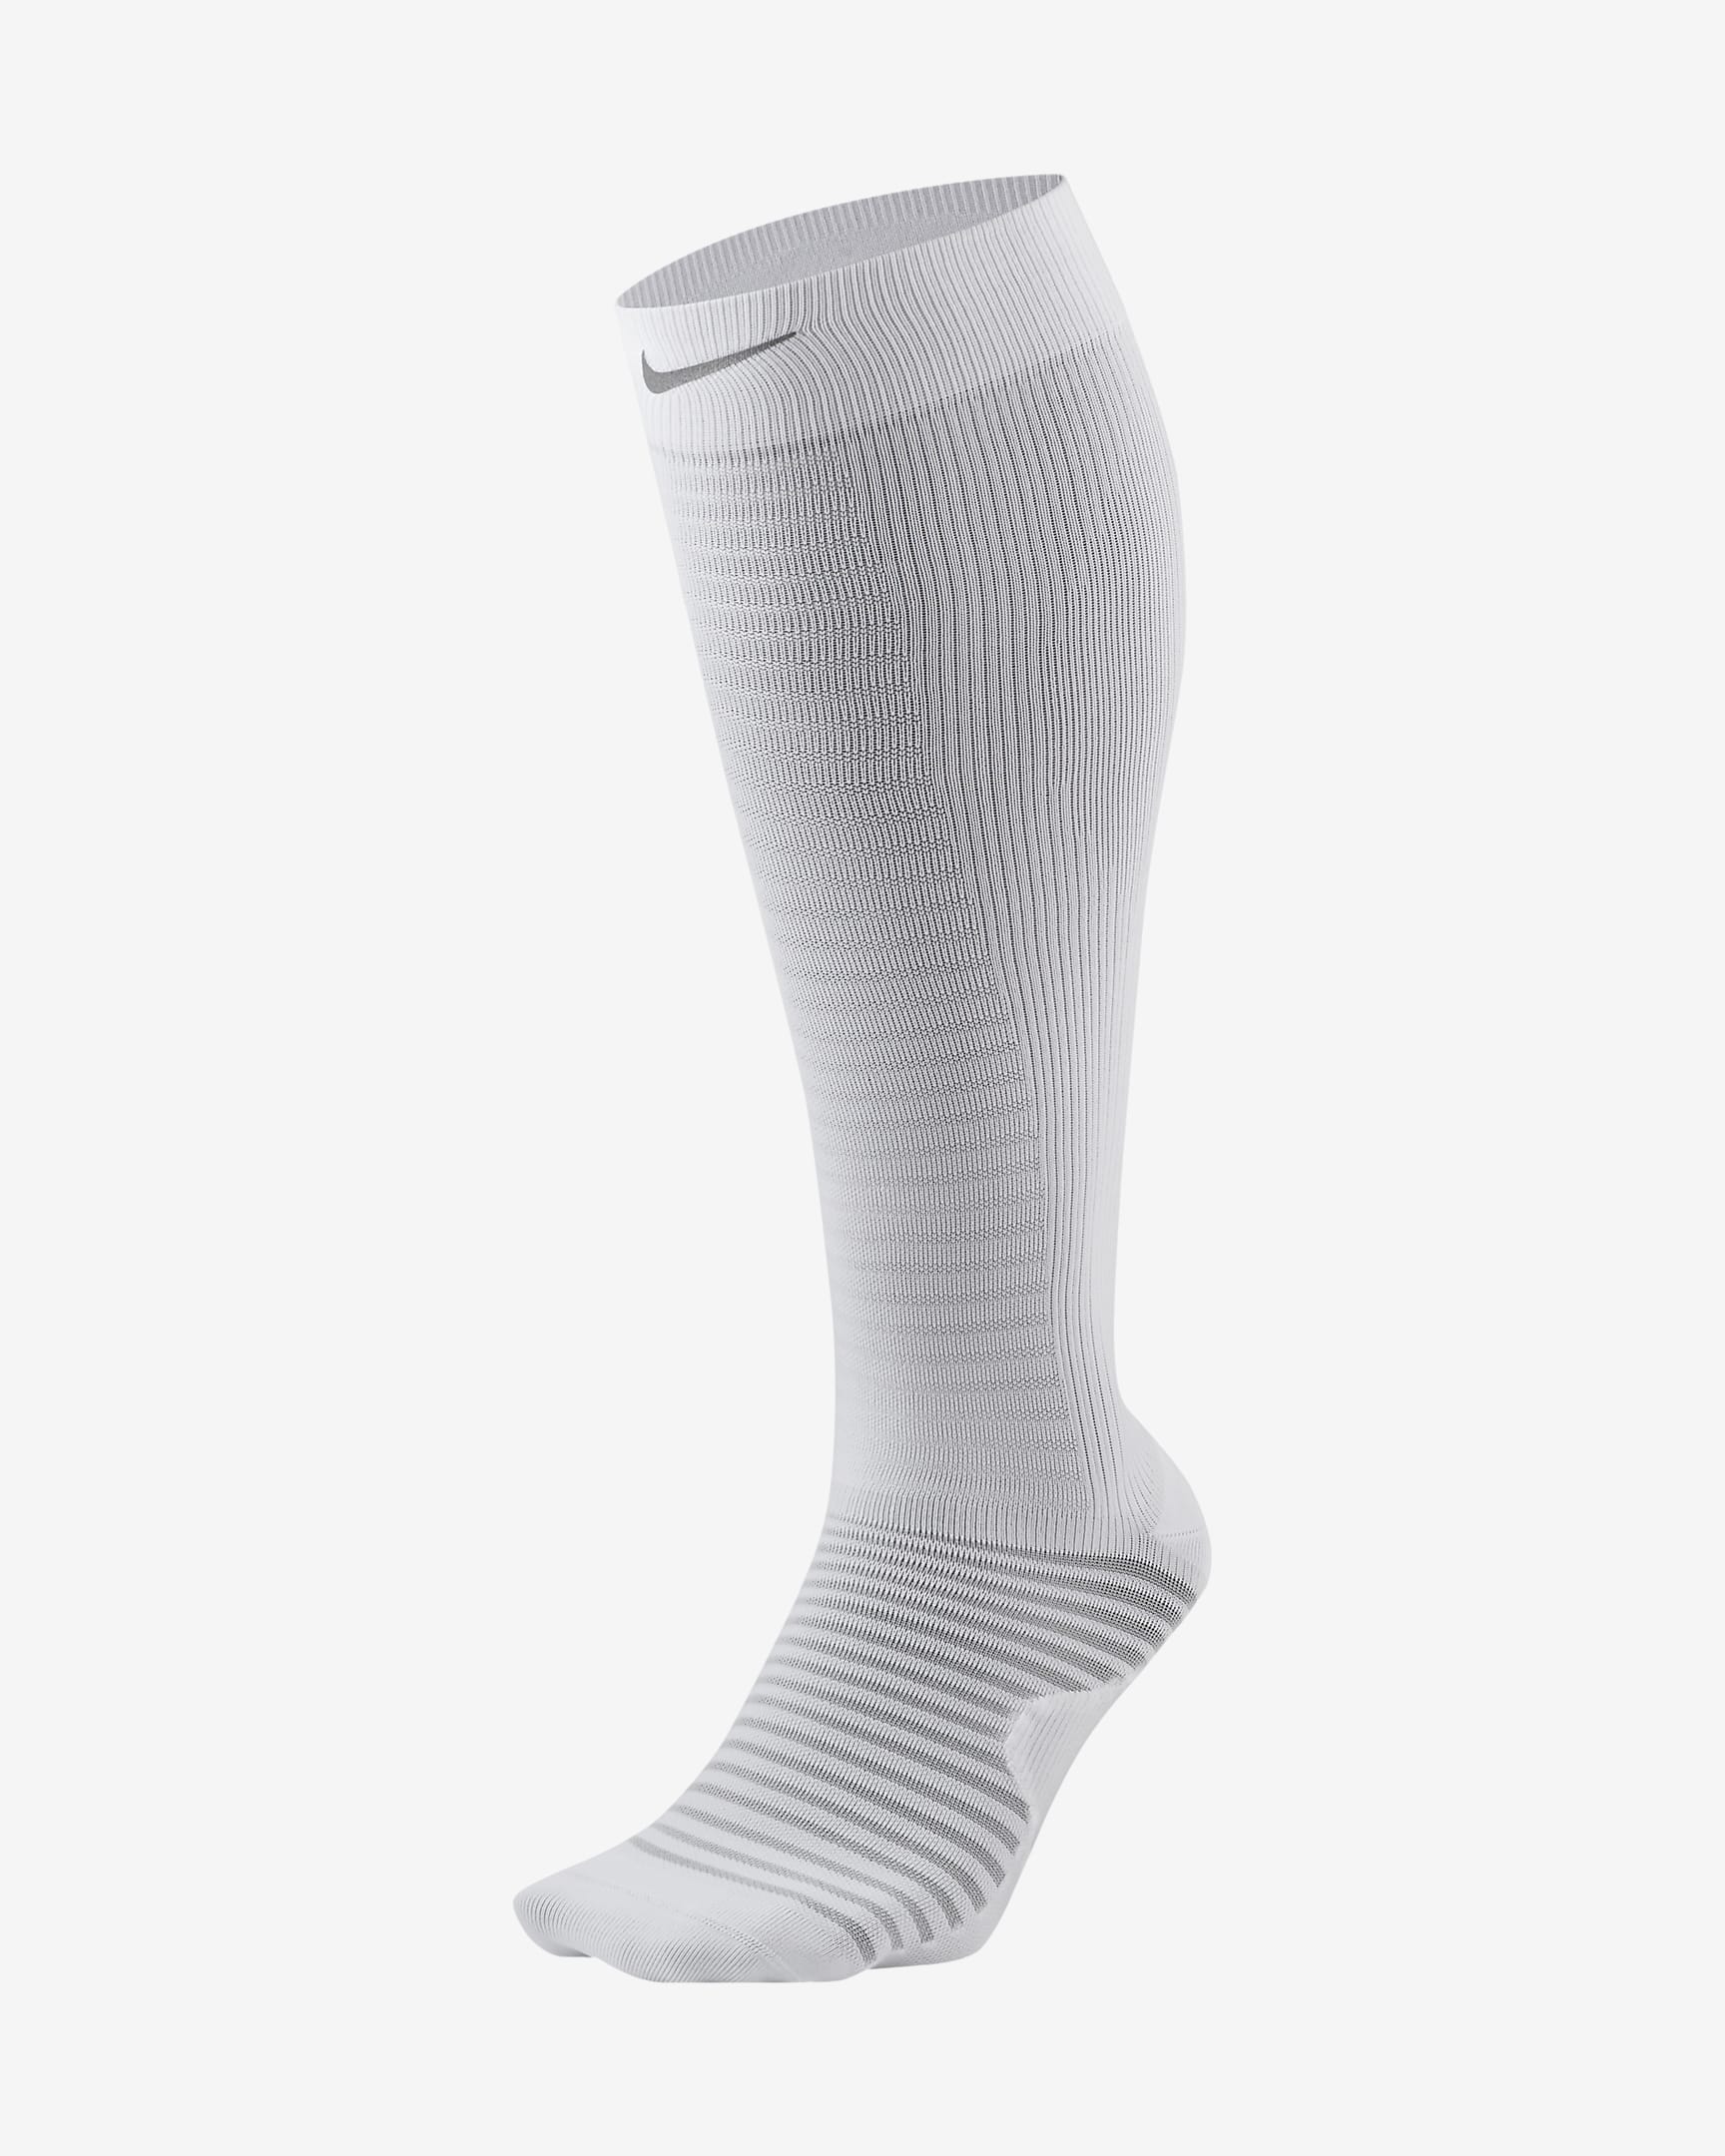 Chaussettes de running hautes de compression Nike Spark Lightweight - Blanc/Reflect Silver